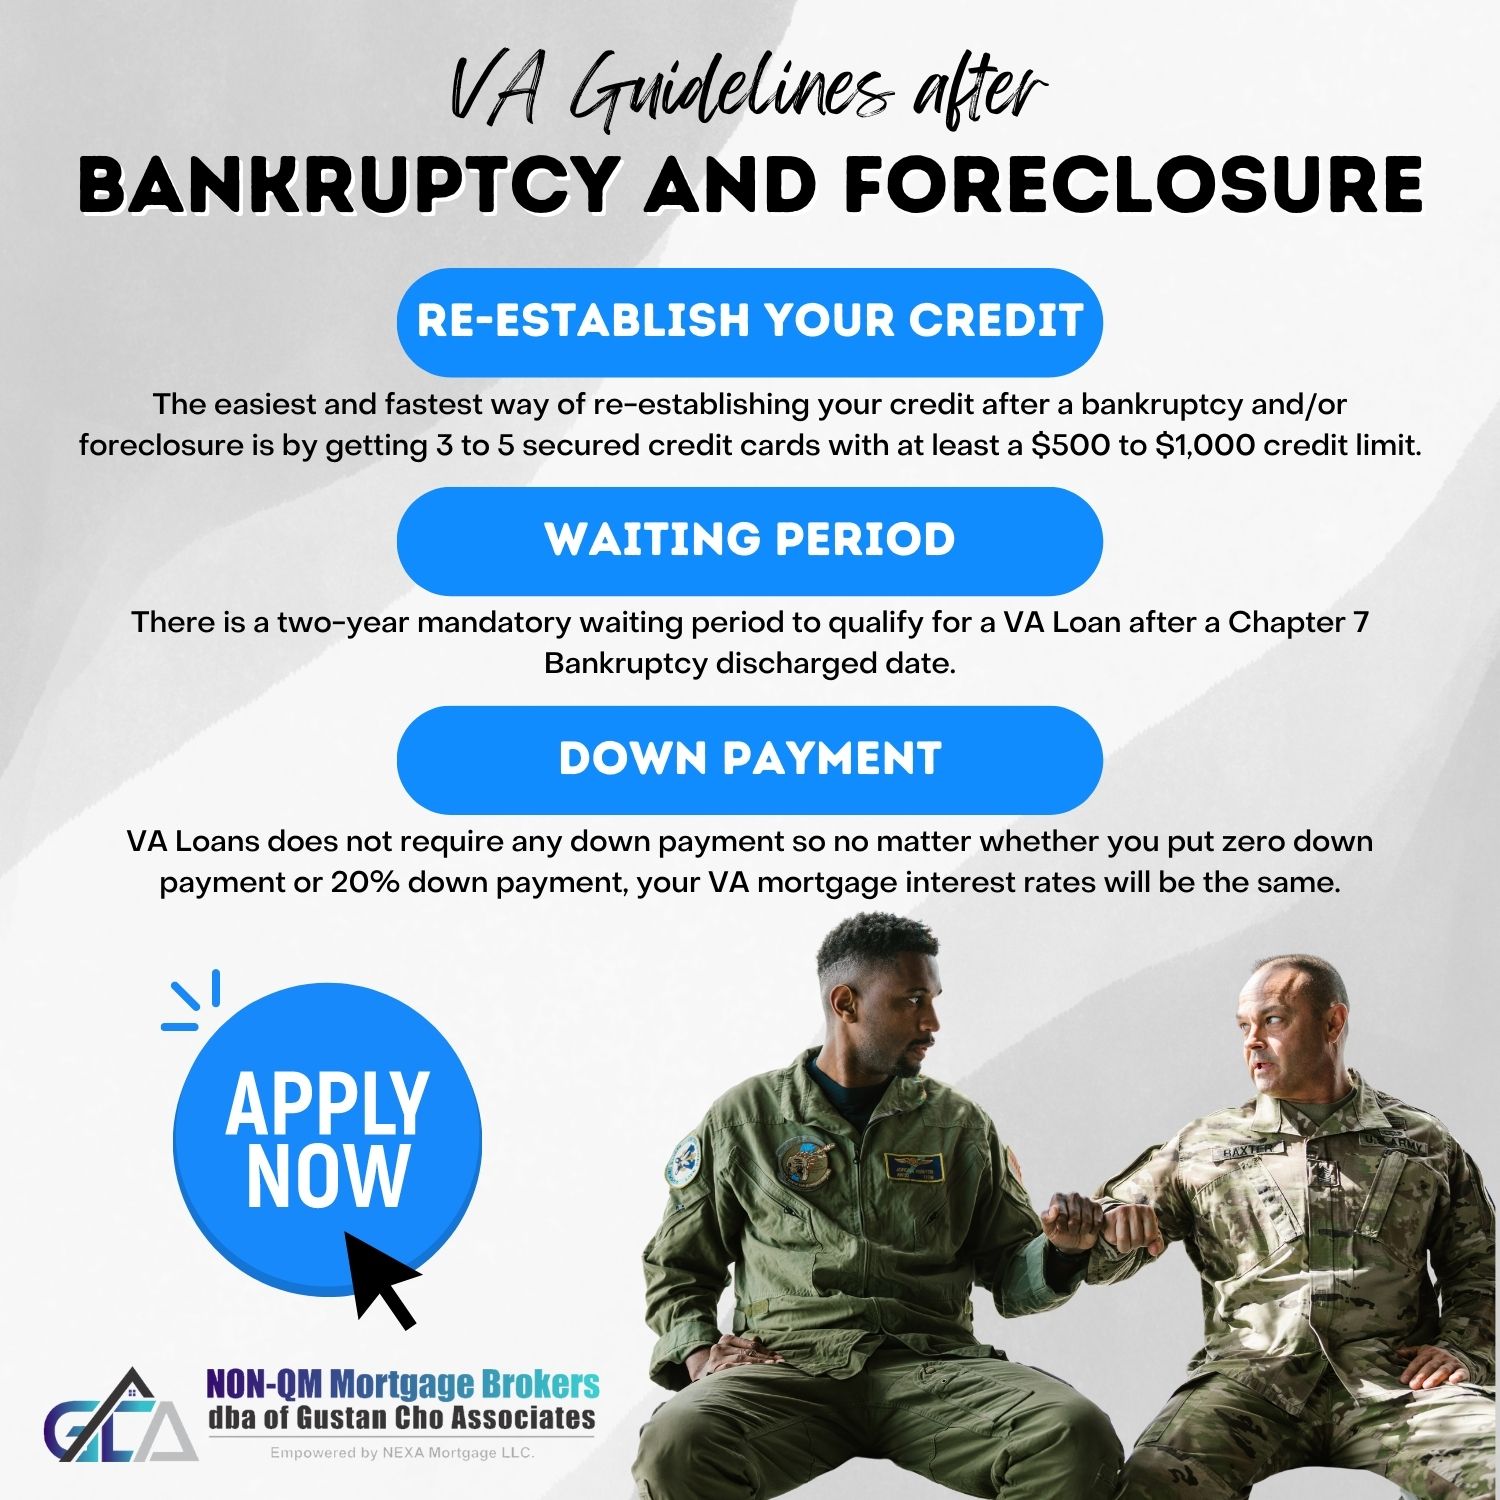 VA Guidelines after bankruptcy